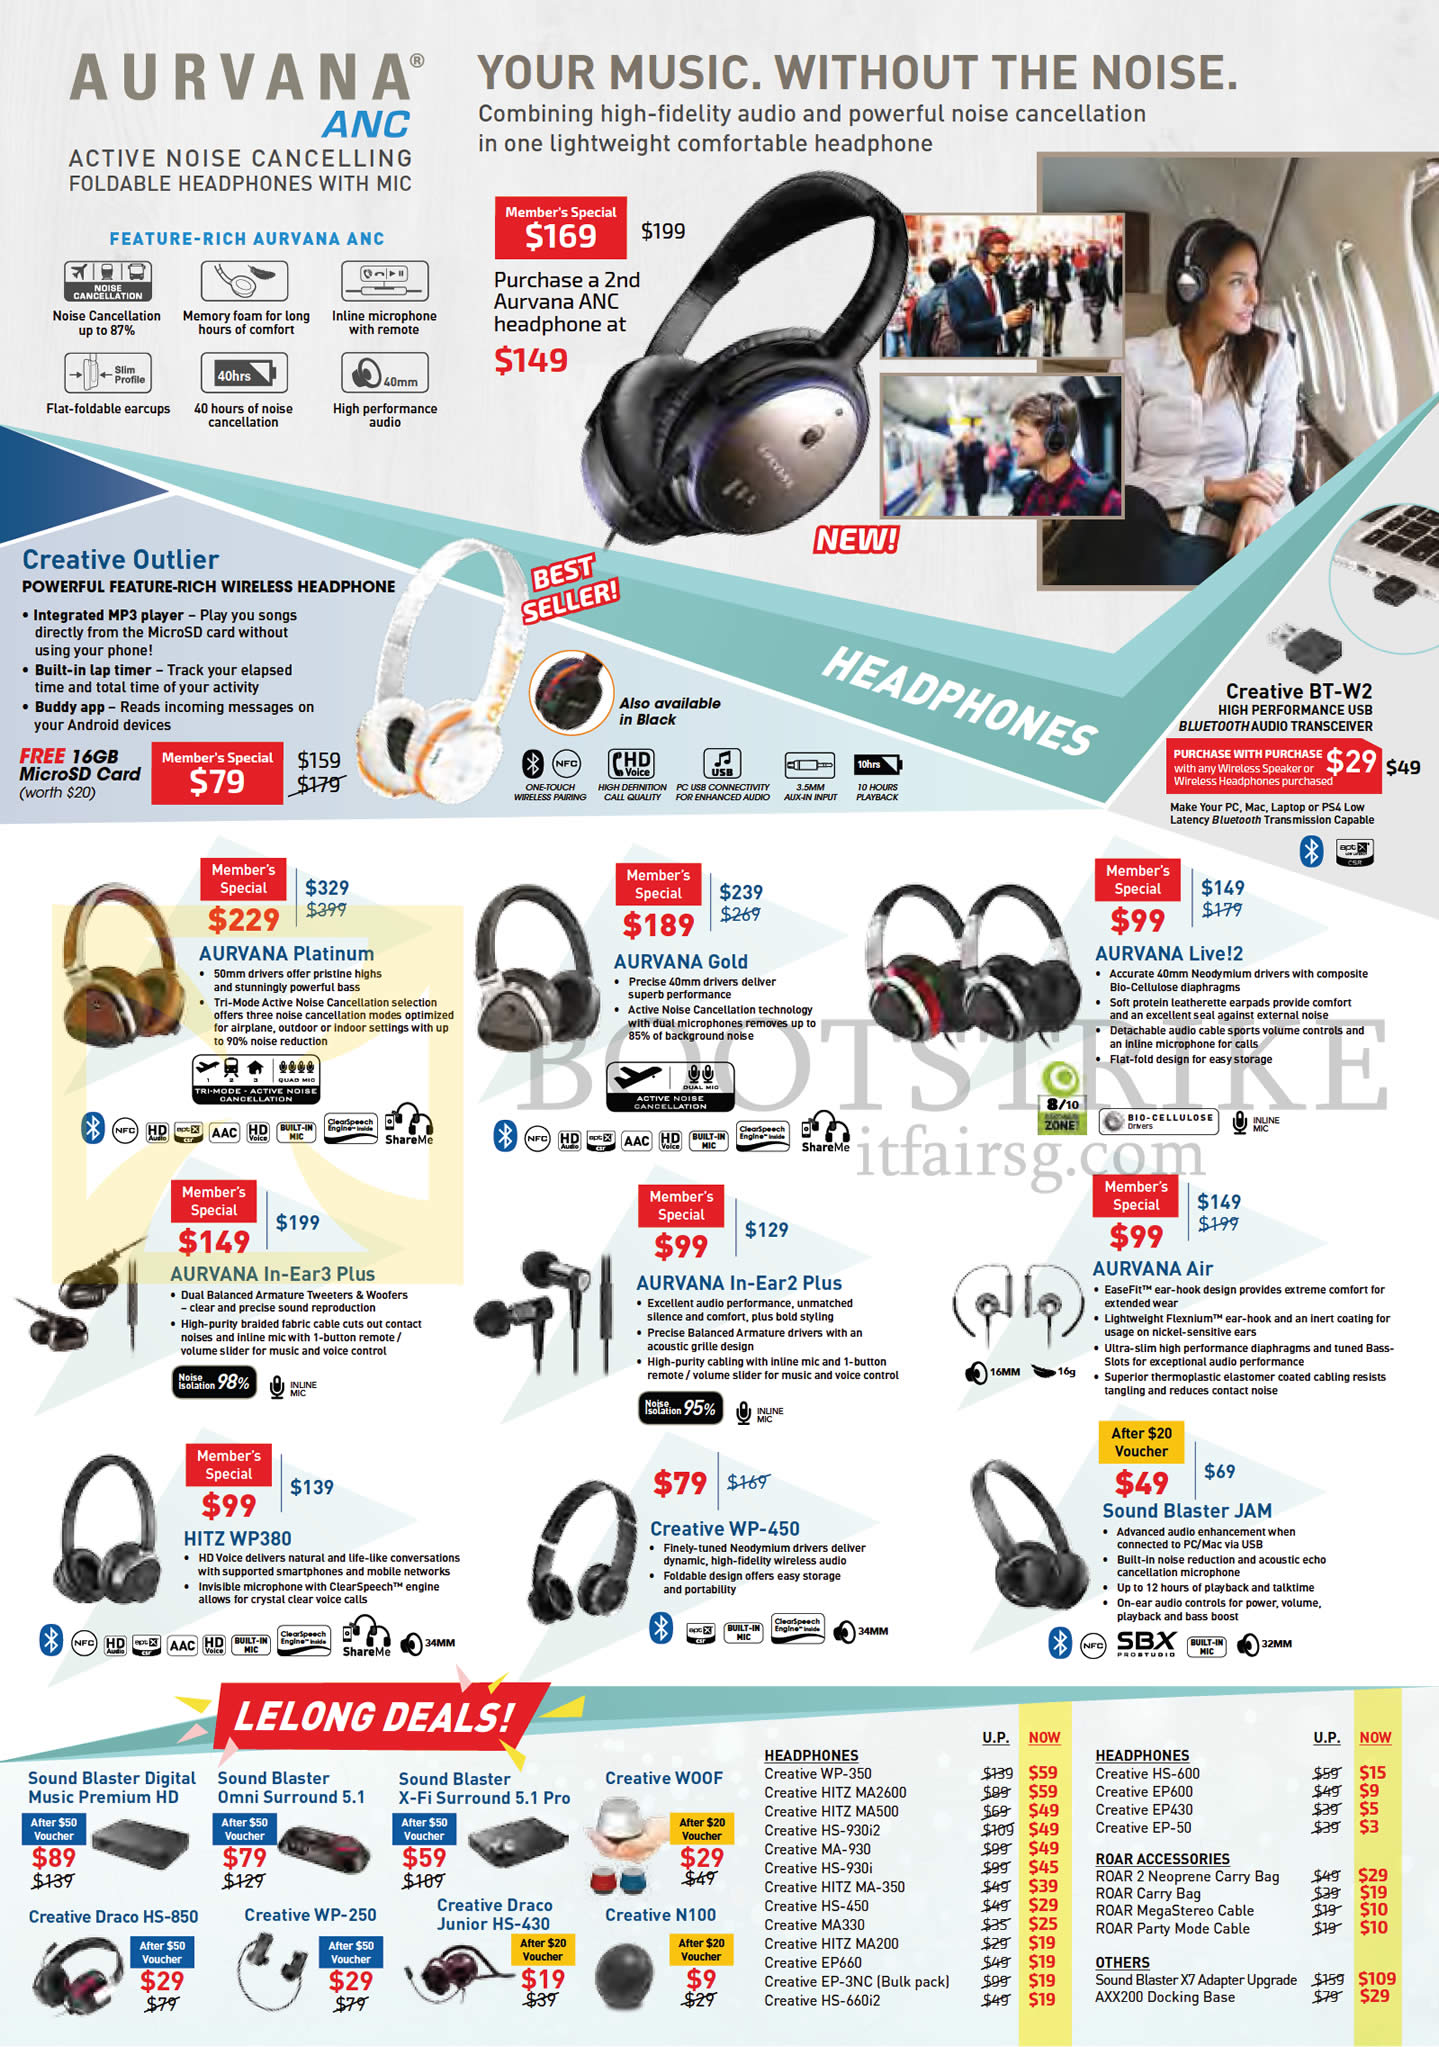 PC SHOW 2016 price list image brochure of Creative Headphones, Lelong Deals, Aurvana Platinum, Gold, Live 2, In-Ear 3 Plus, 2 Plus, Air, Hitz WP380, 450, Sound Blaster JAM